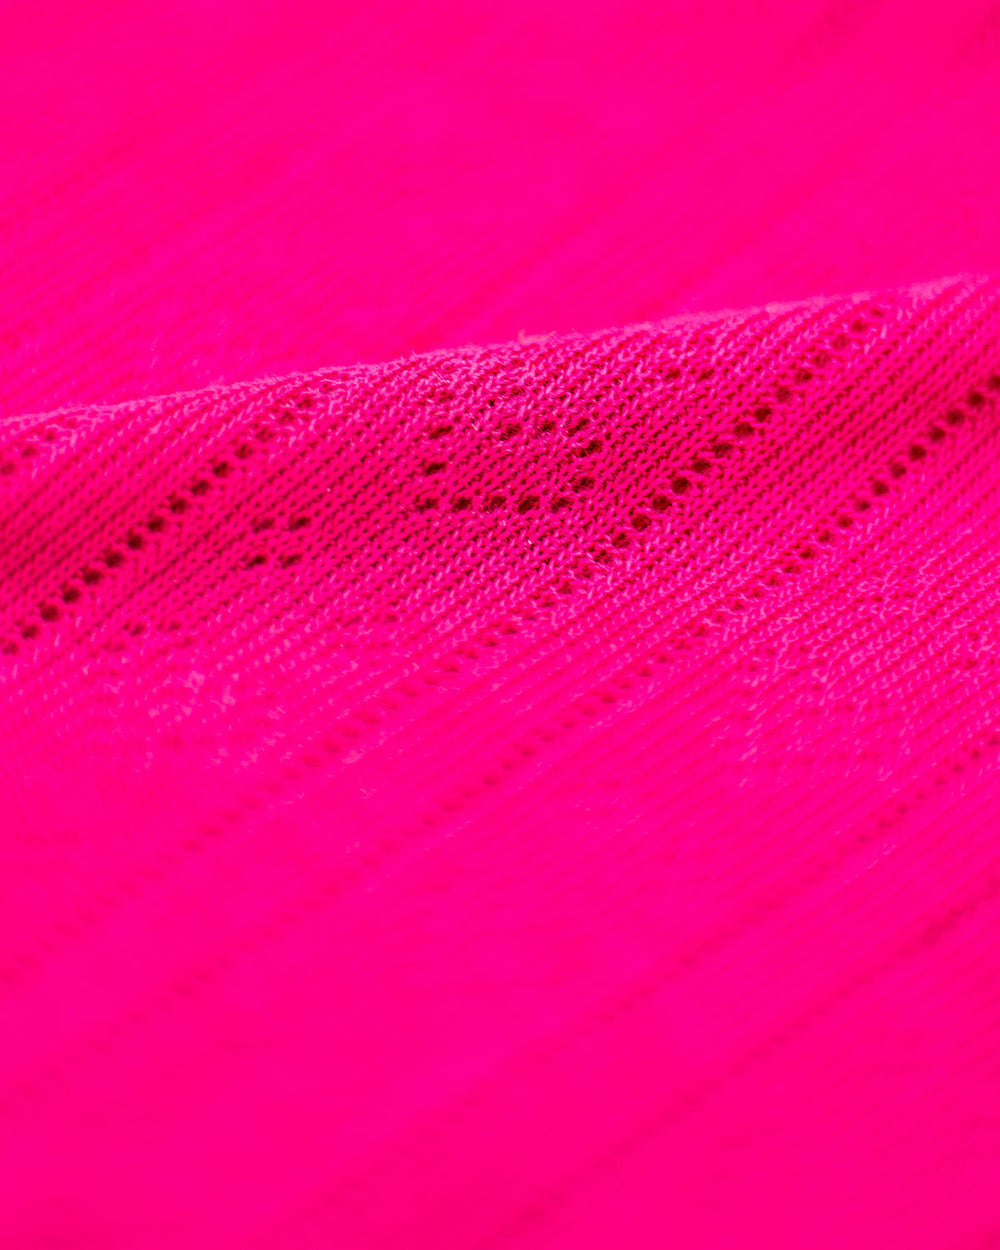 Pointelle Knit Cami & Long Pajama Bottom Set – Raspberry Stripe & Stare®